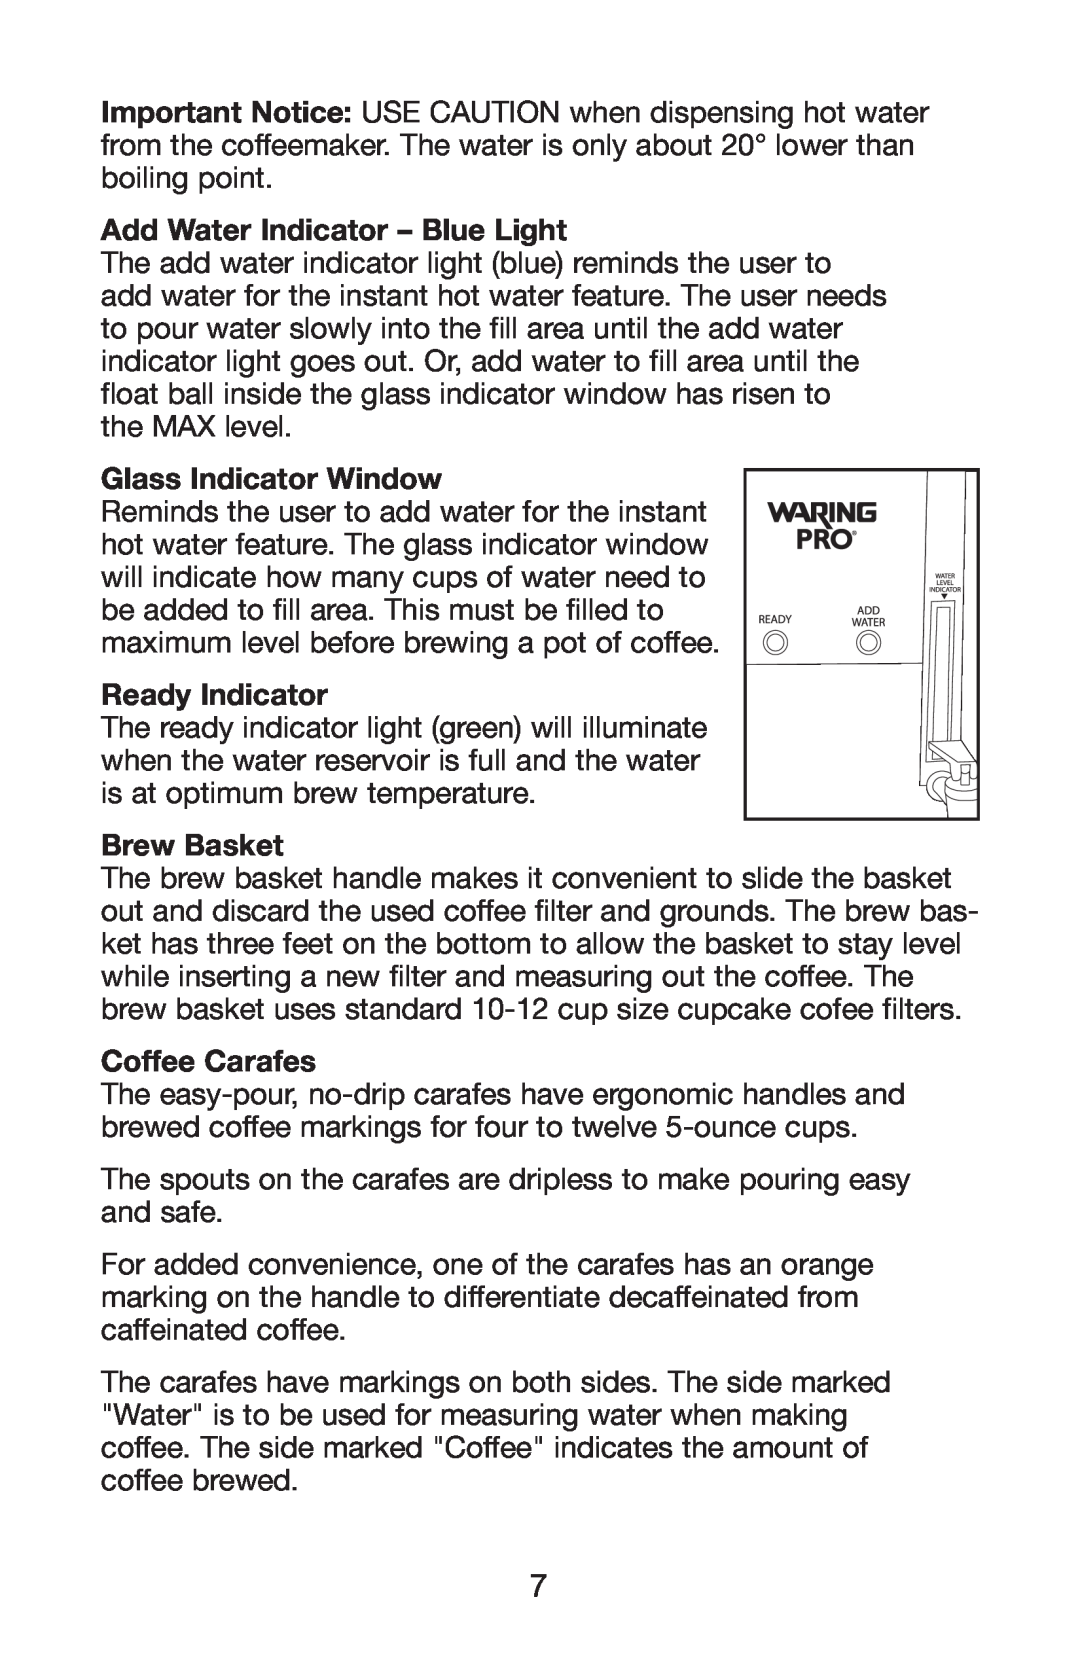 Waring WC1000 manual Add Water Indicator - Blue Light, Glass Indicator Window, Ready Indicator, Brew Basket, Coffee Carafes 